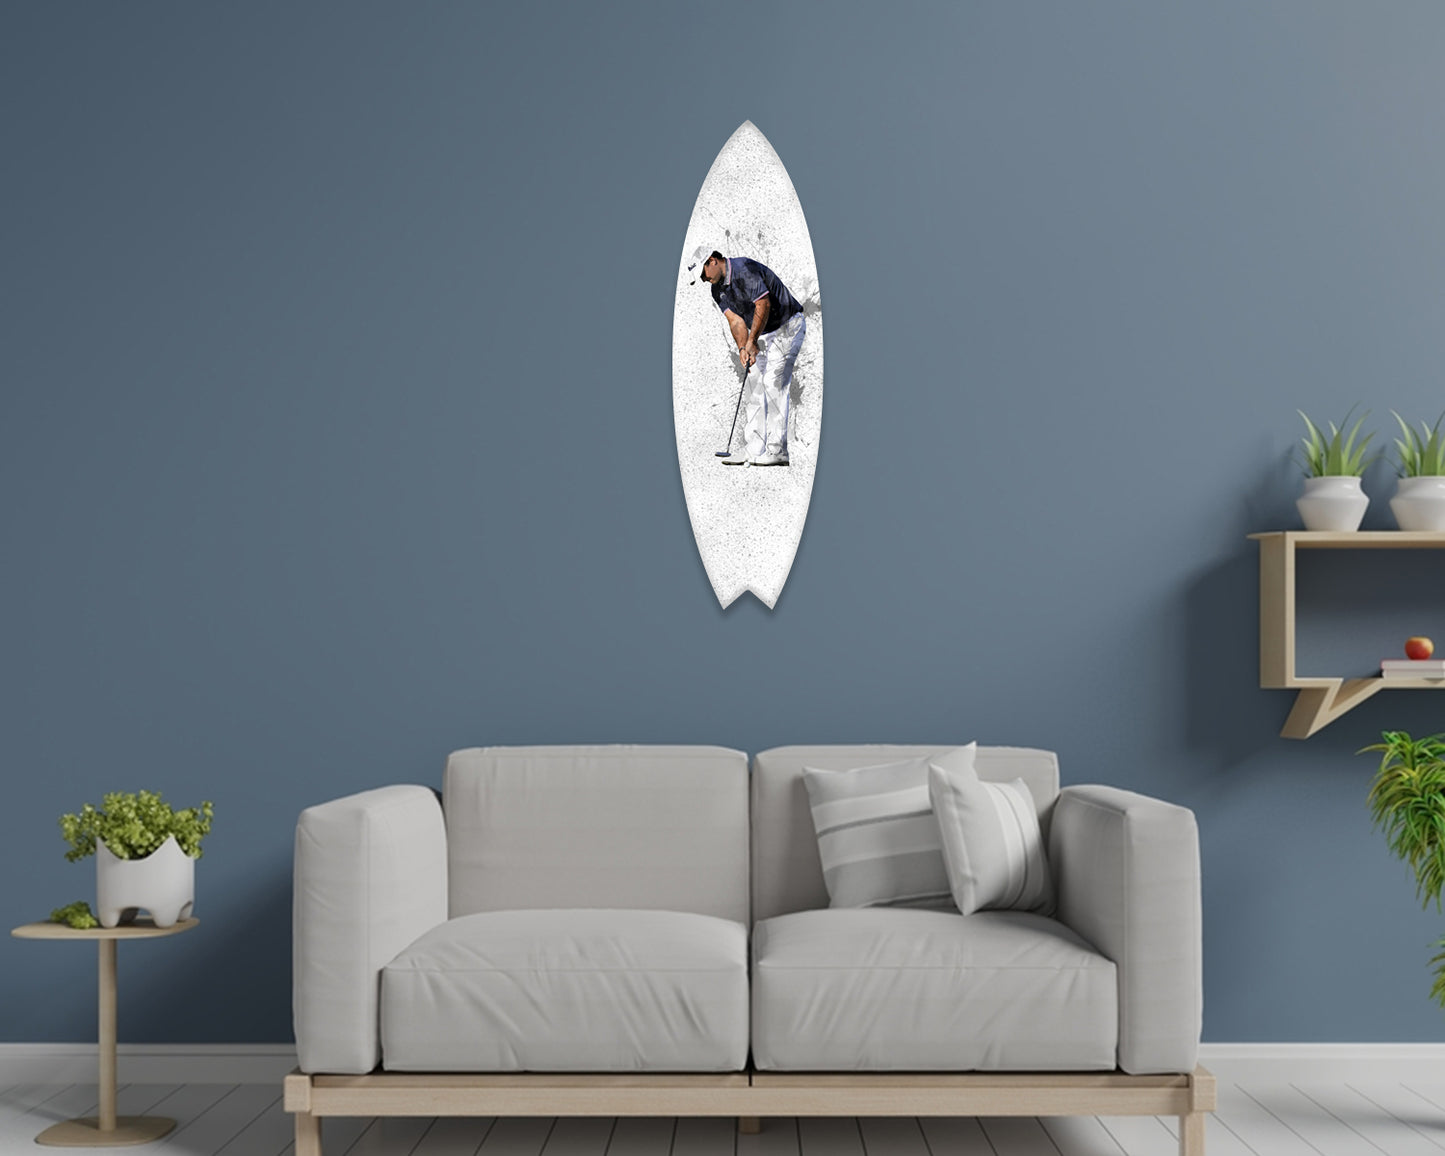 Patrick Reed Acrylic Surfboard Wall Art 